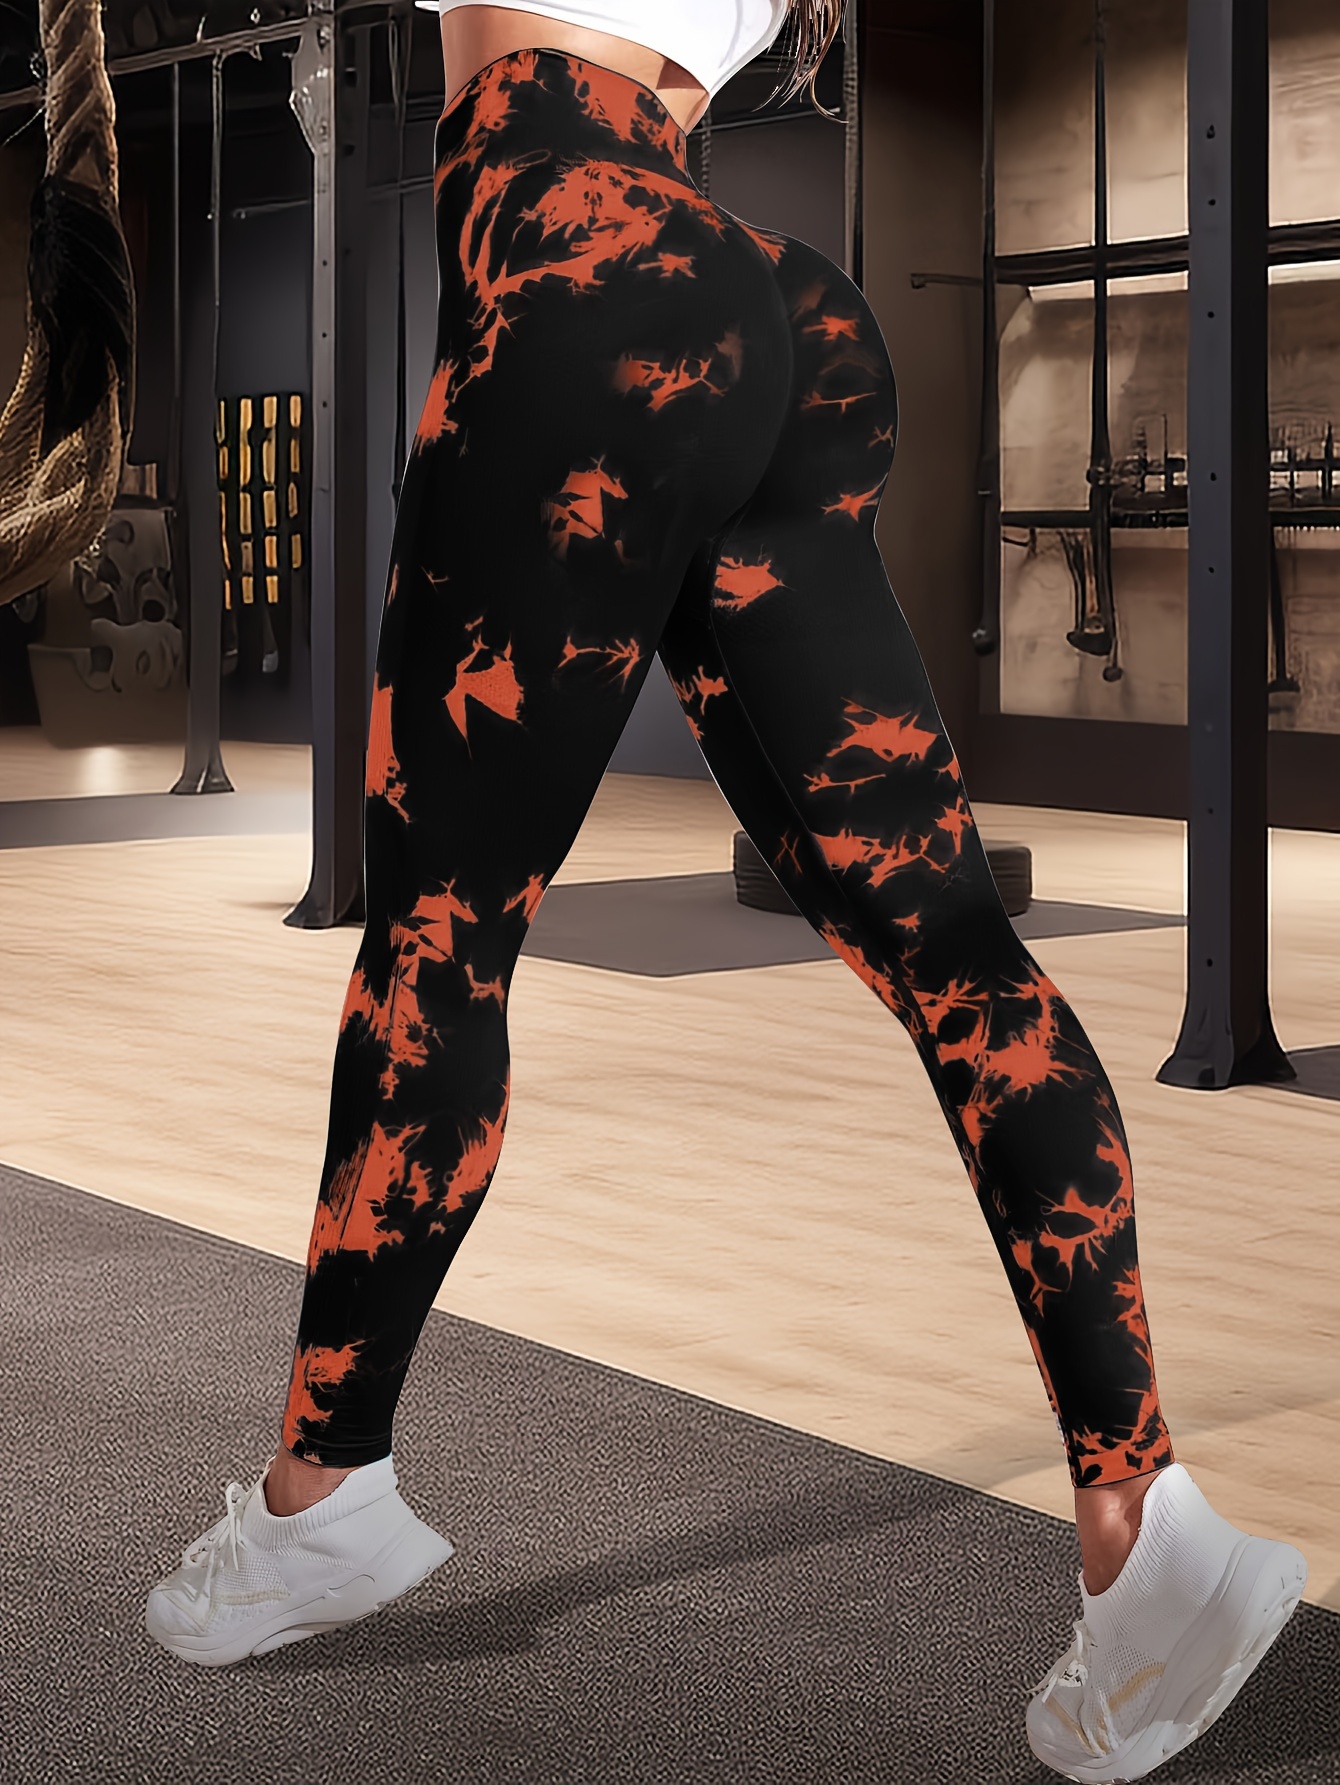 Orange and Black Camo Leggings  Activewear for Sports, Gym, Yoga